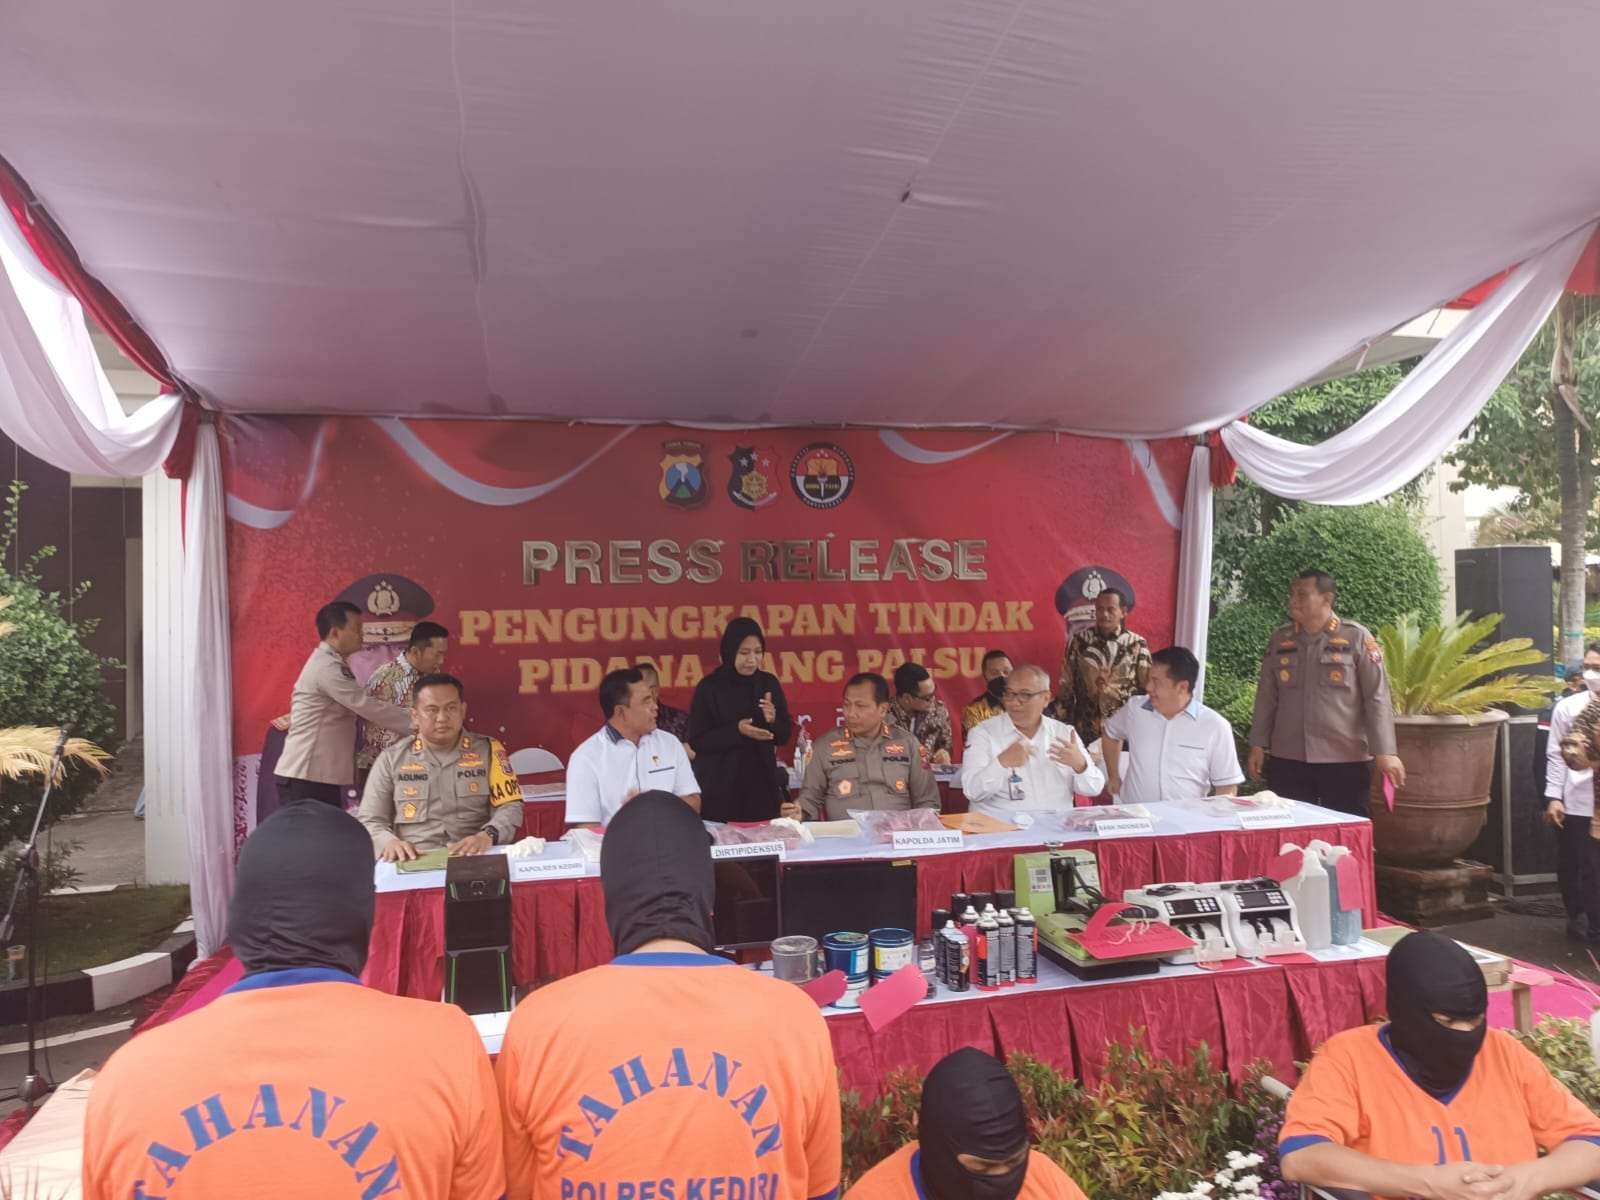 Rilis pengungkapan kasus tindak pidana uang palsu di Mapolda Jatim, Surabaya, Kamis 3 November 2022. (Foto: Fariz Yarbo/Ngopibareng.id)